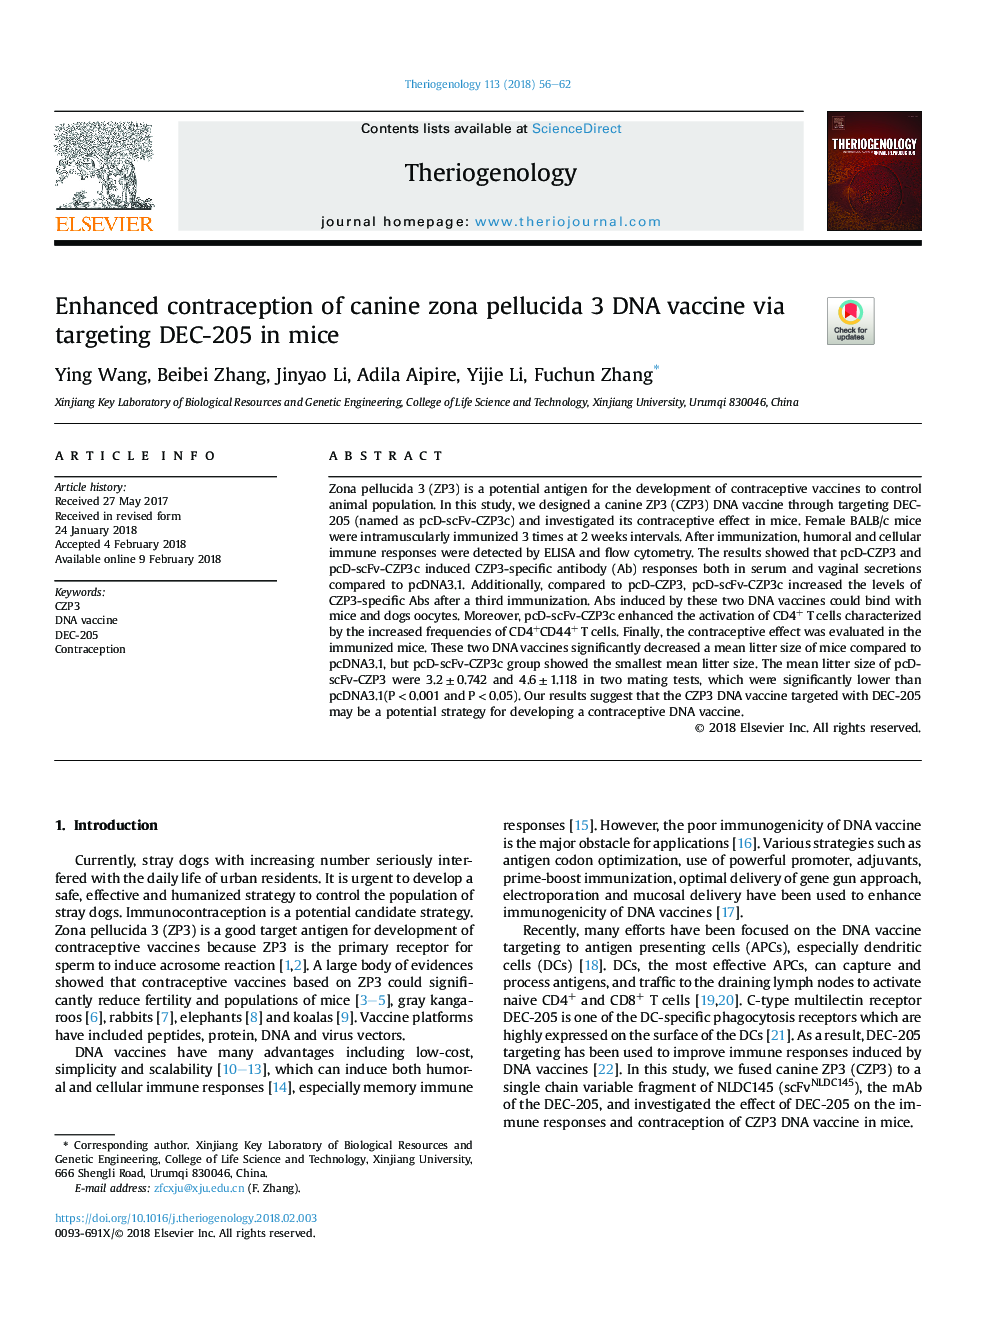 Enhanced contraception of canine zona pellucida 3 DNA vaccine via targeting DEC-205 in mice